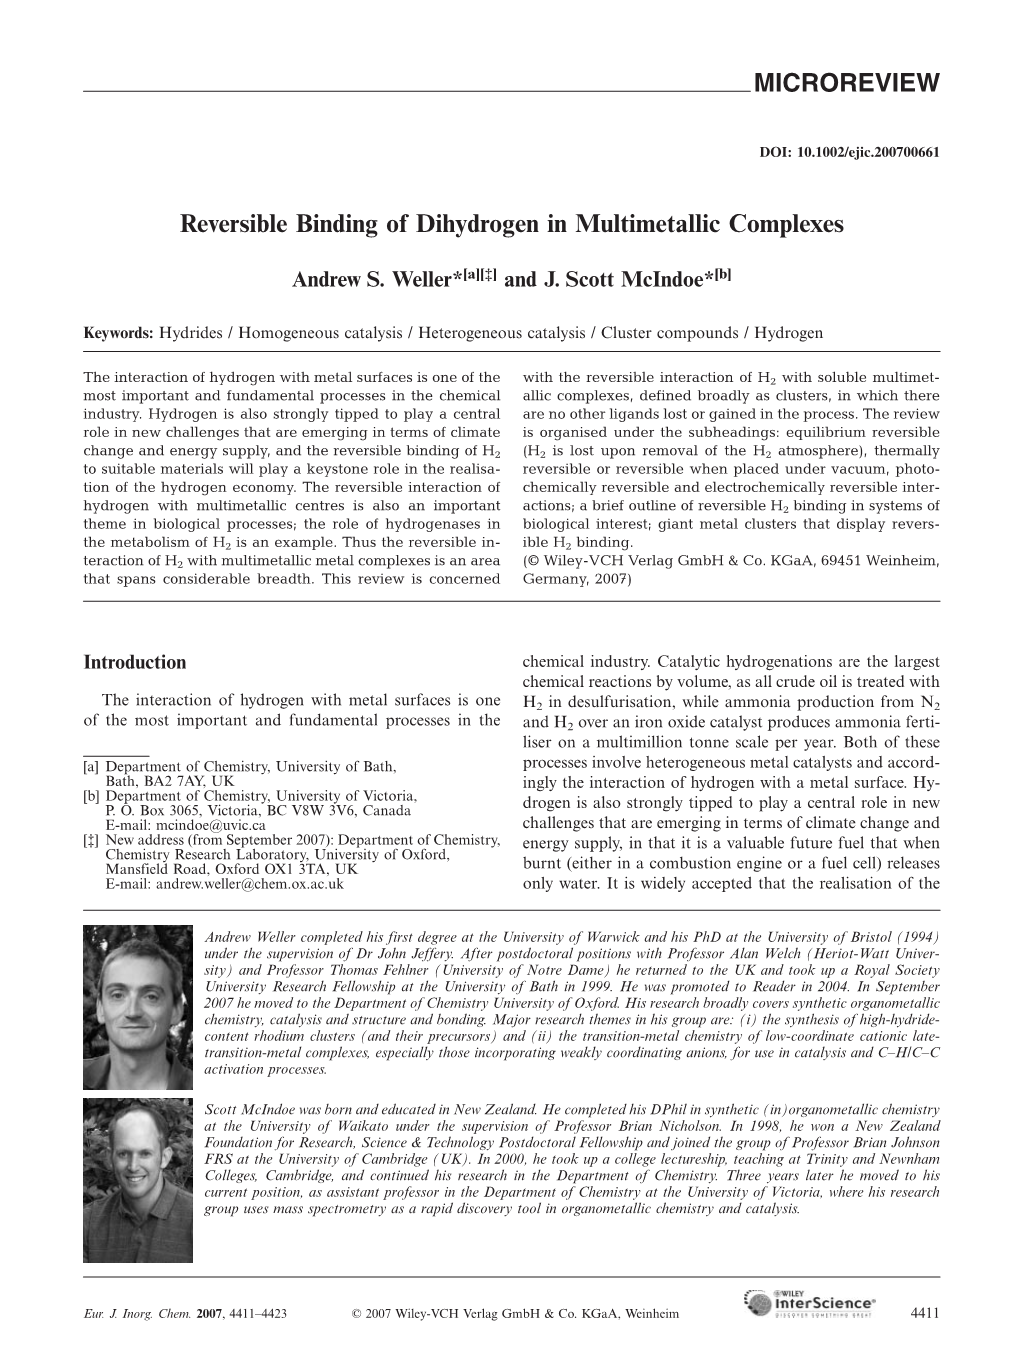 Reversible Binding of Dihydrogen in Multimetallic Complexes